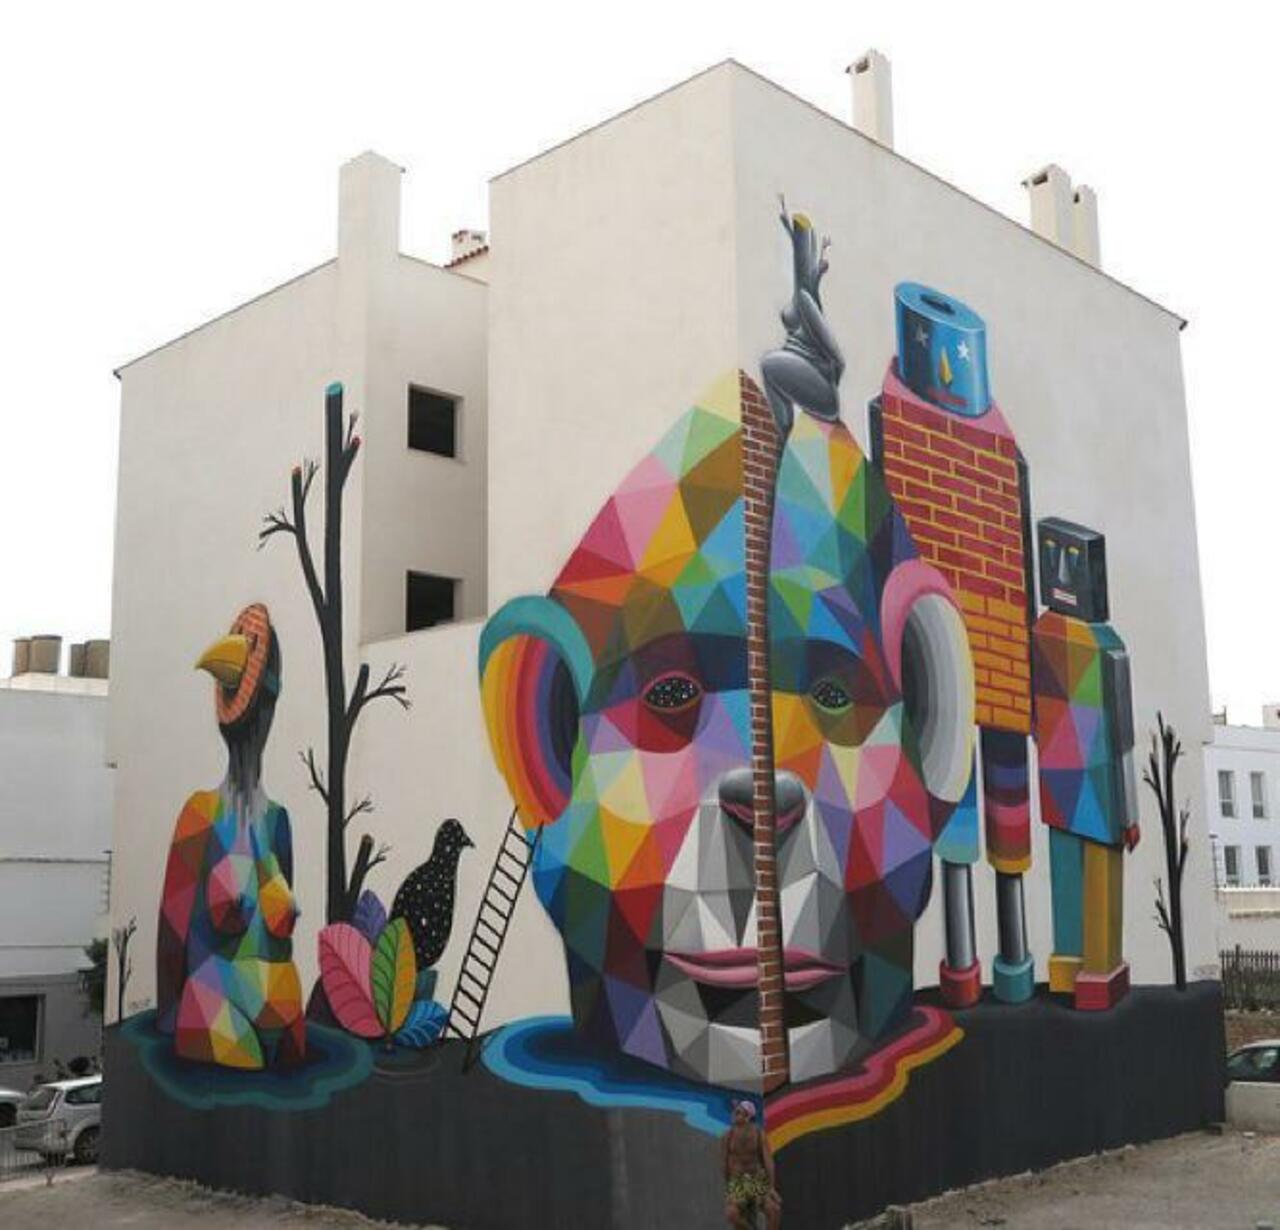 RT @richardbanfa: #streetart by @OKUDART @BloopFestival #switch #graffiti #bedifferent #art #arte http://t.co/pdTwbkeWuI